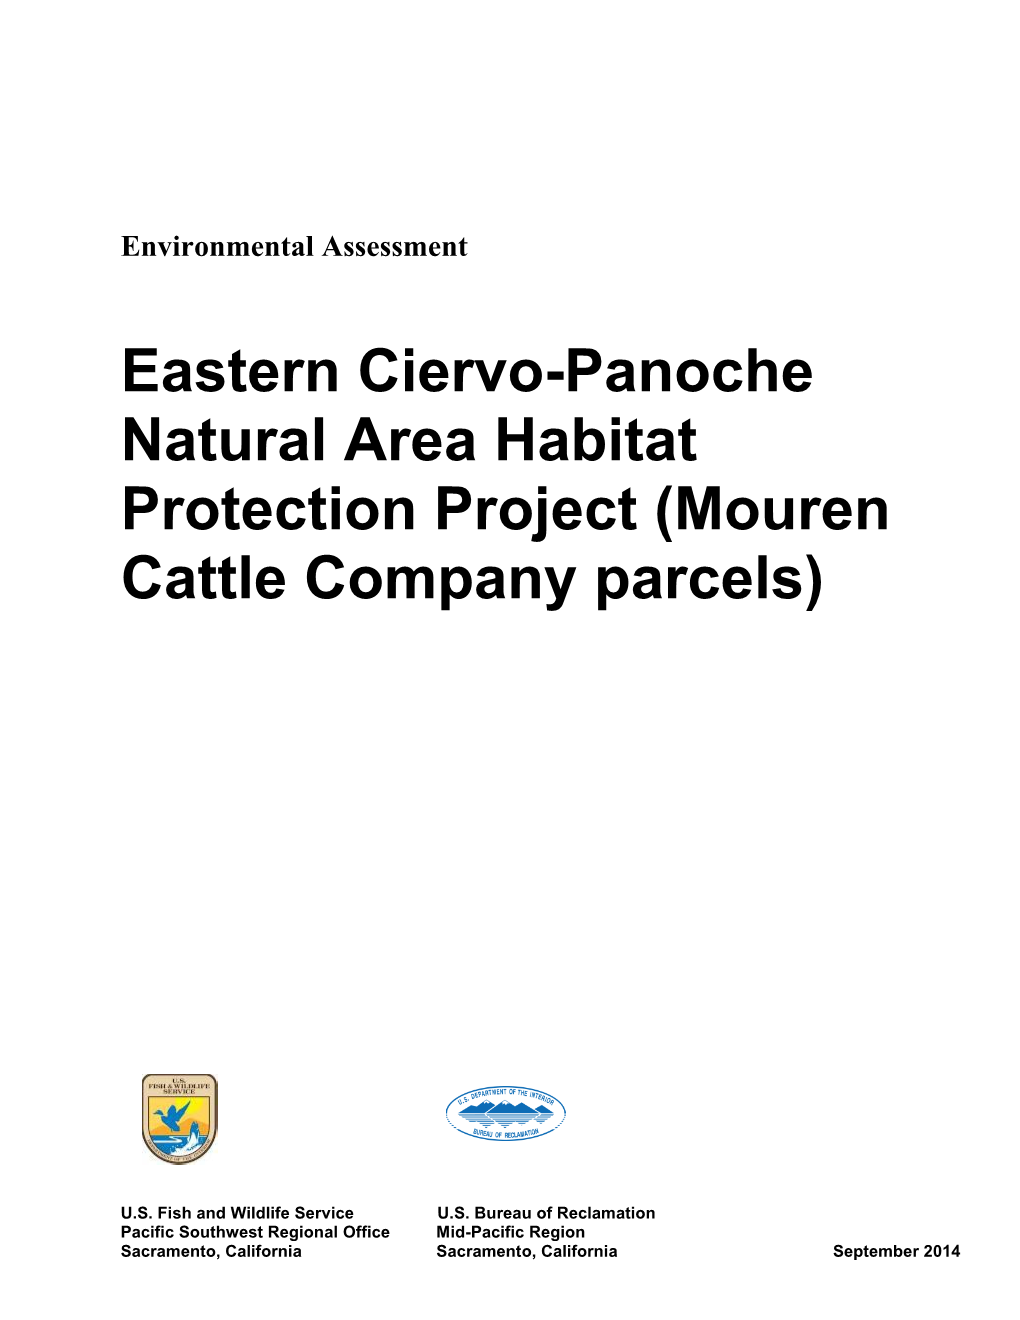 Eastern Ciervo Panoche Natural Area Habitat Protection Project Mouren